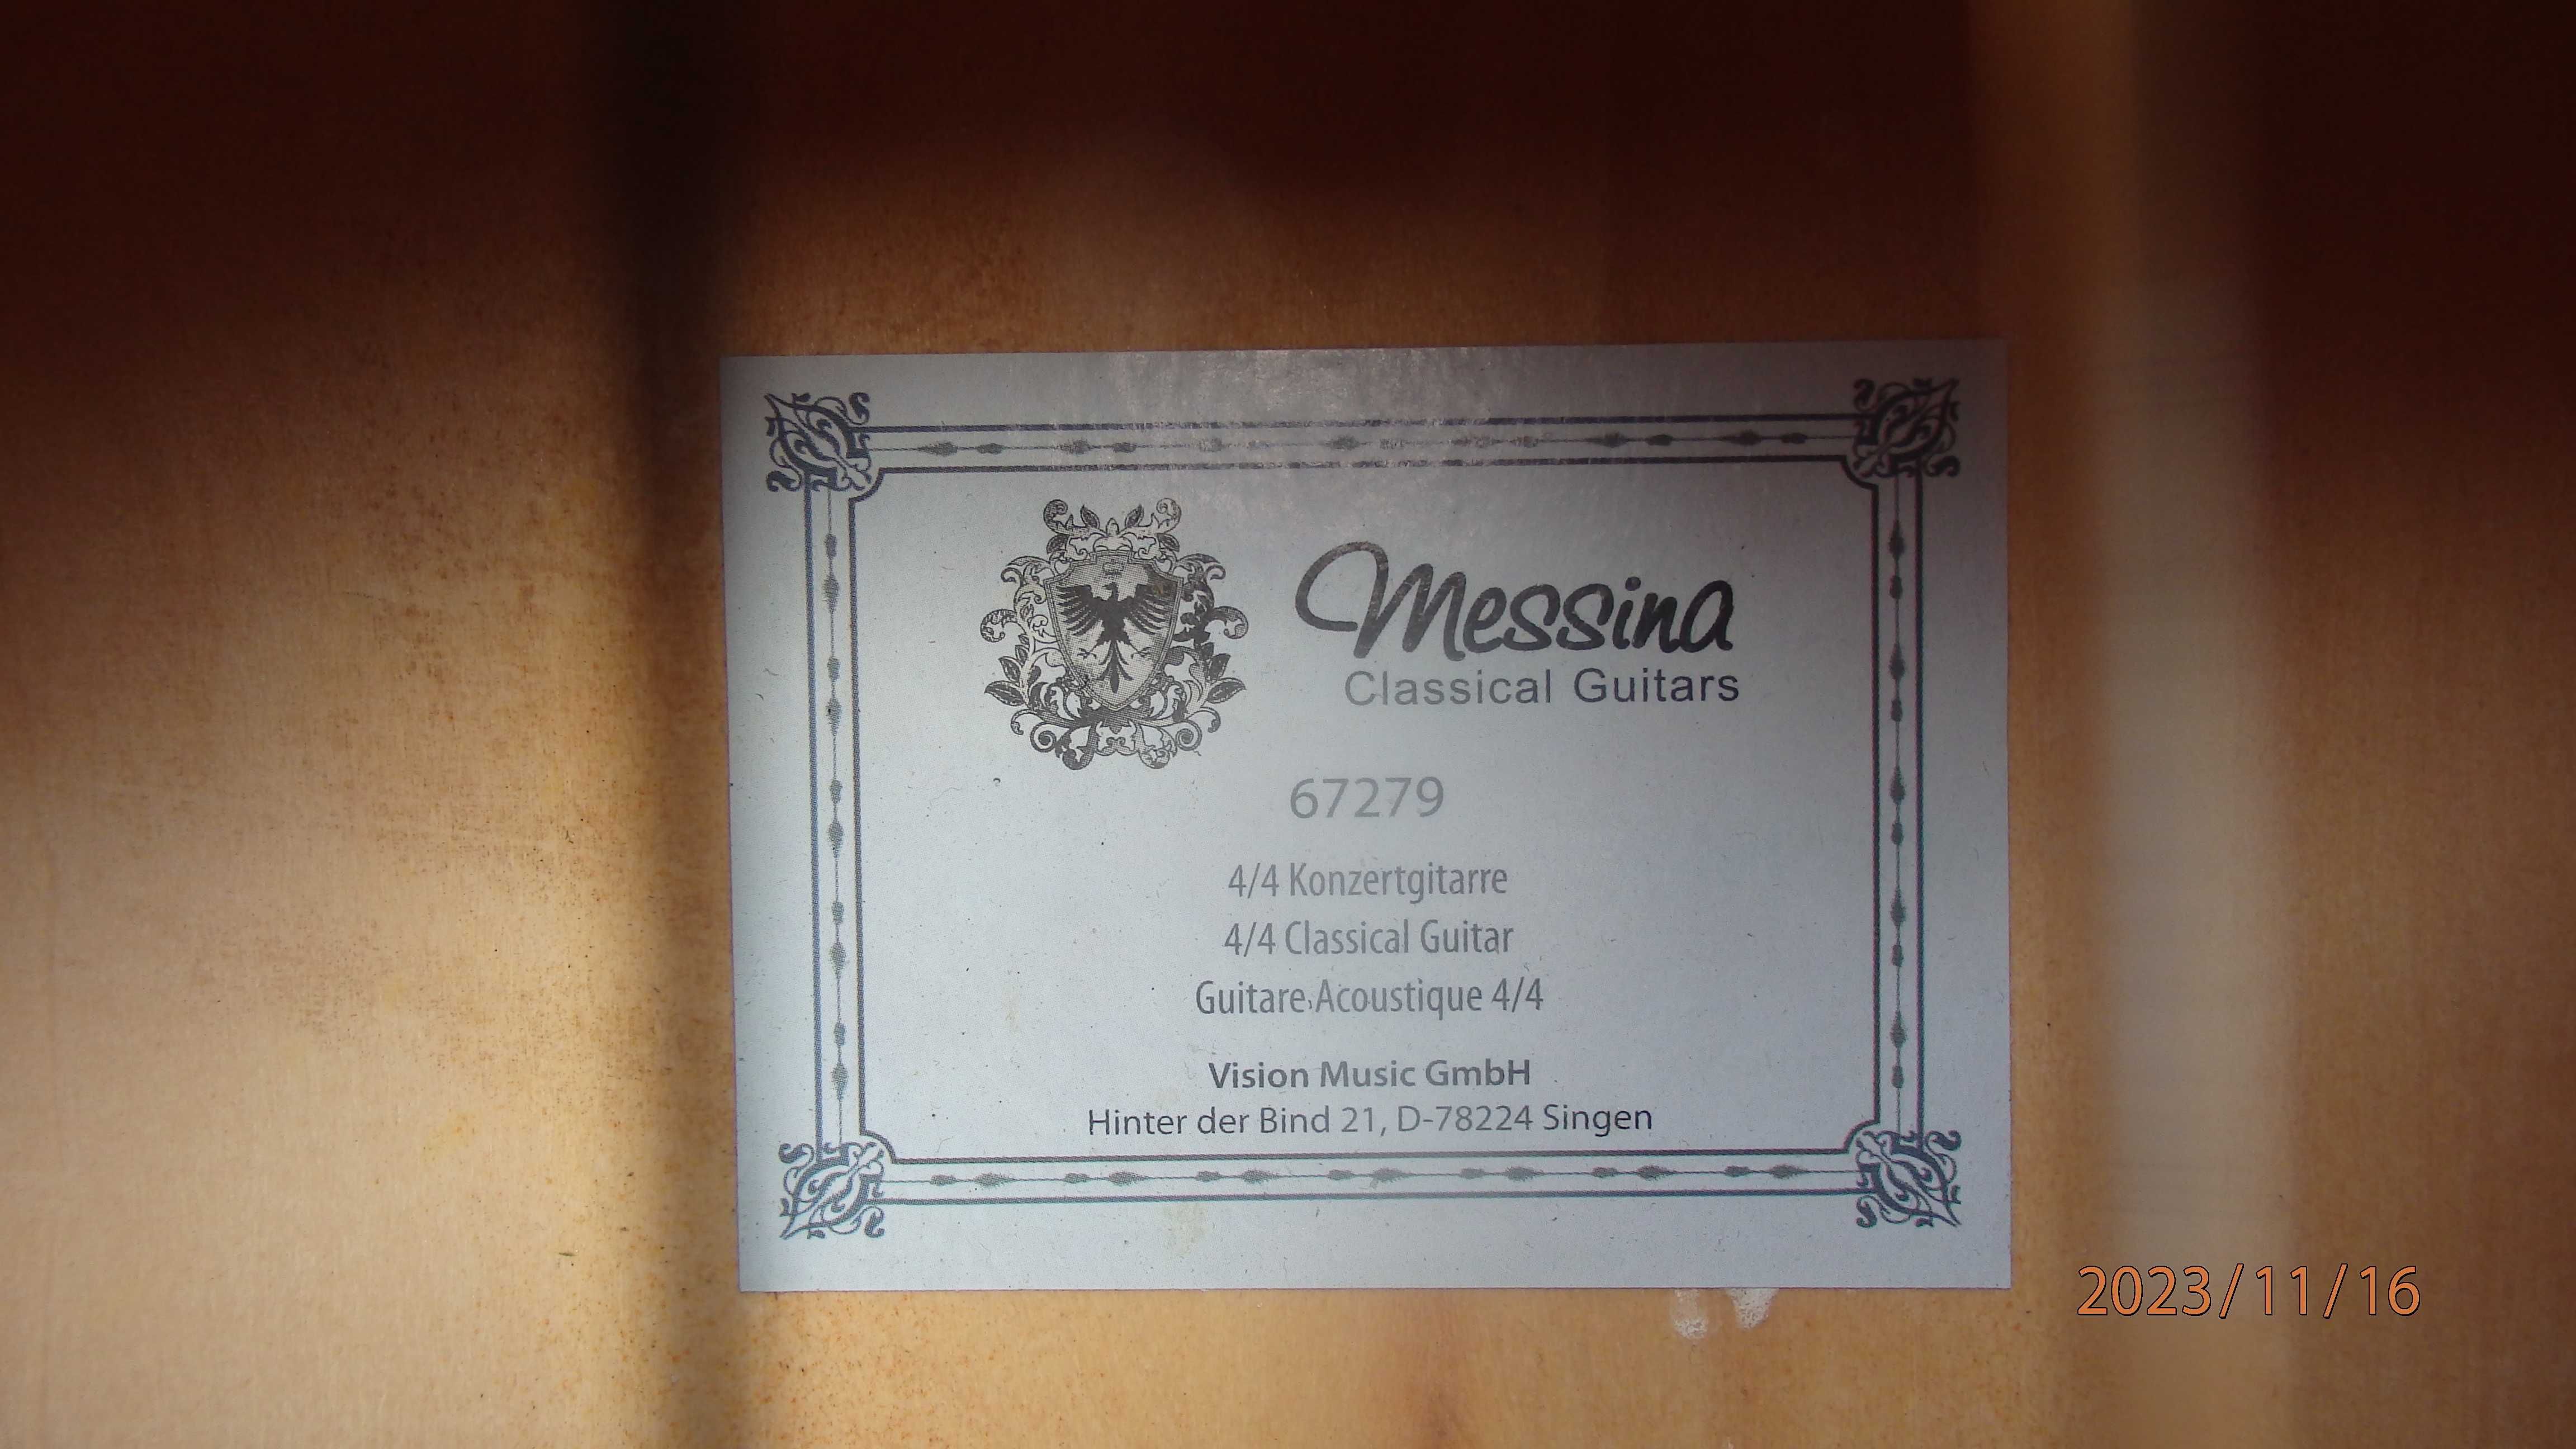 Gitara - classic - duże pudło Messina - dobra na prezent.